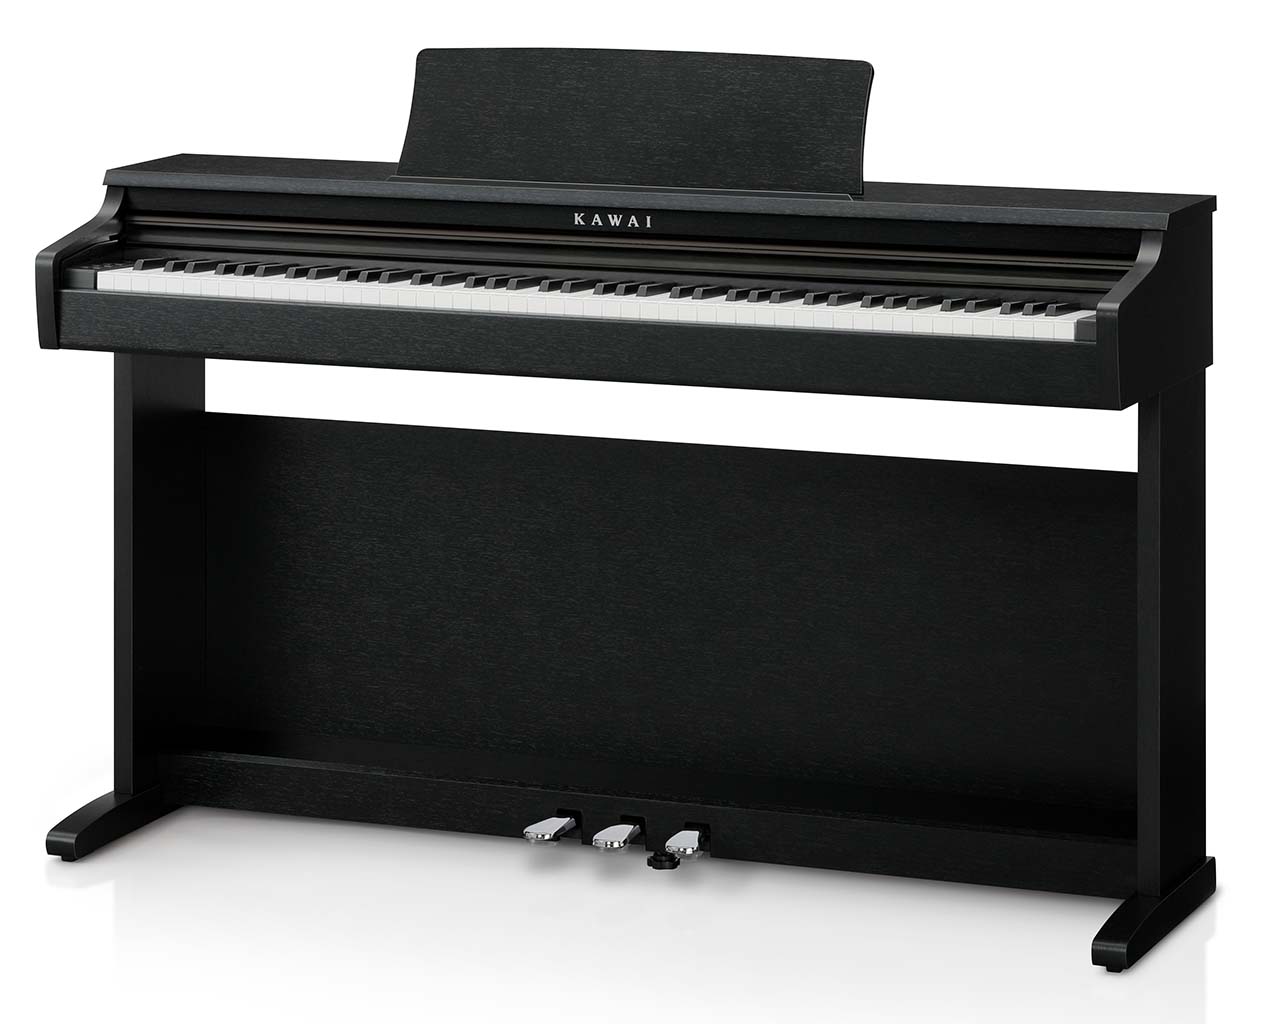 Kawai-KDP-120-B-Digitalpiano-schwarz-Pianohaus-Filipski